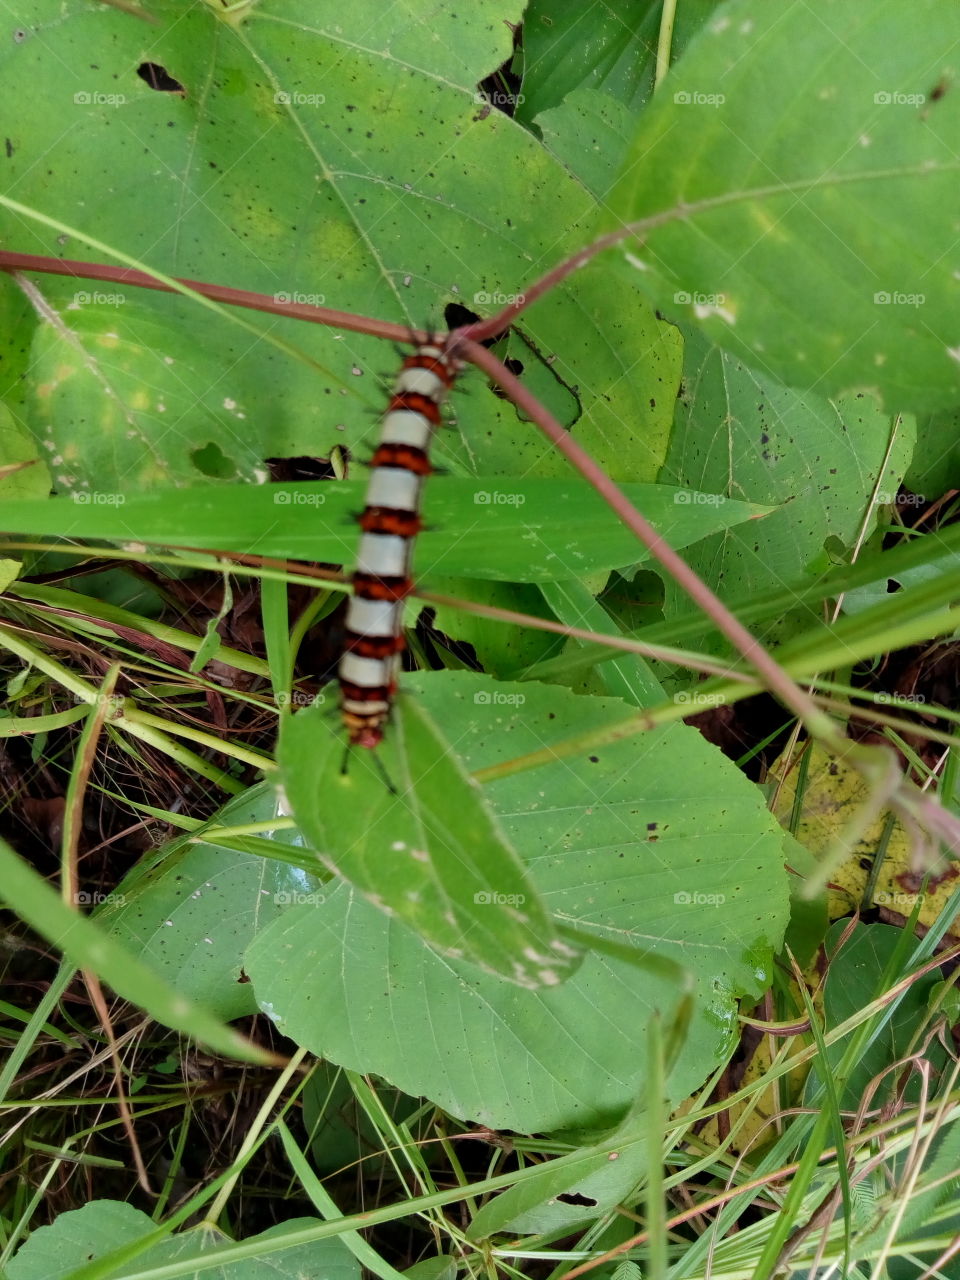 millipede, centipede, on a green leaf or flowers